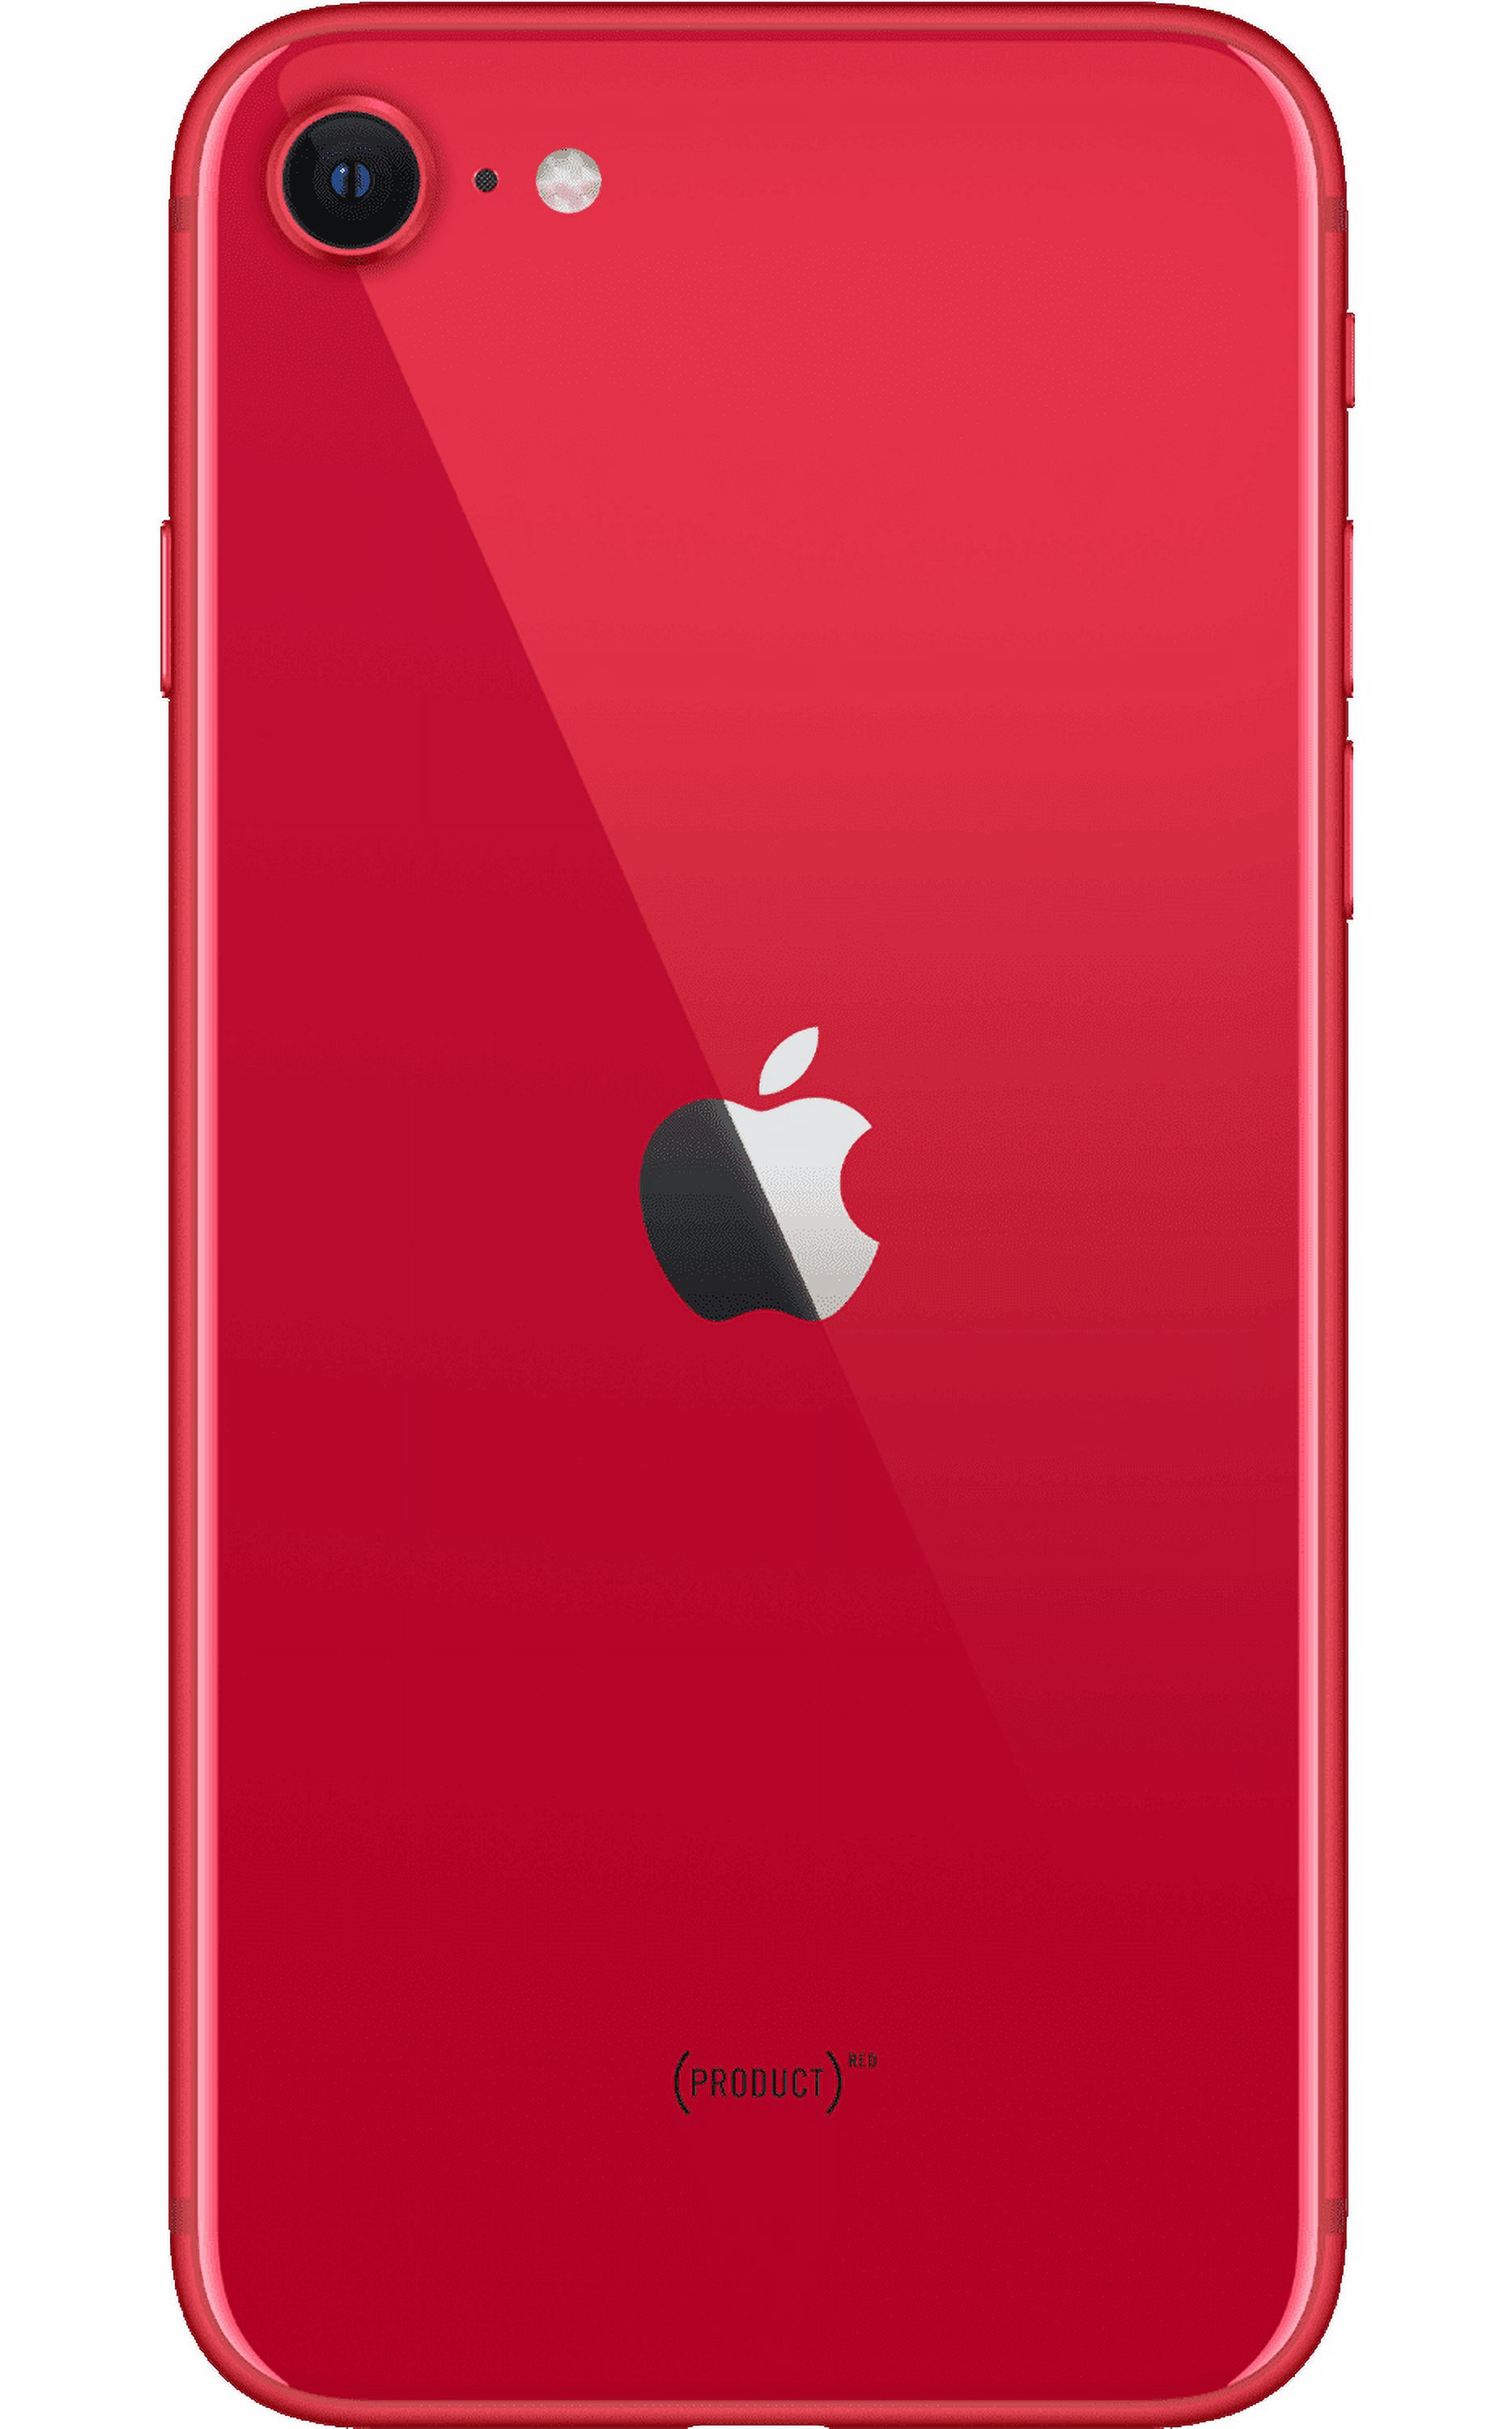 Apple iPhone SE (2020) 128GB GSM/CDMA Fully Unlocked Phone - Red (Grade B Used) - image 2 of 4